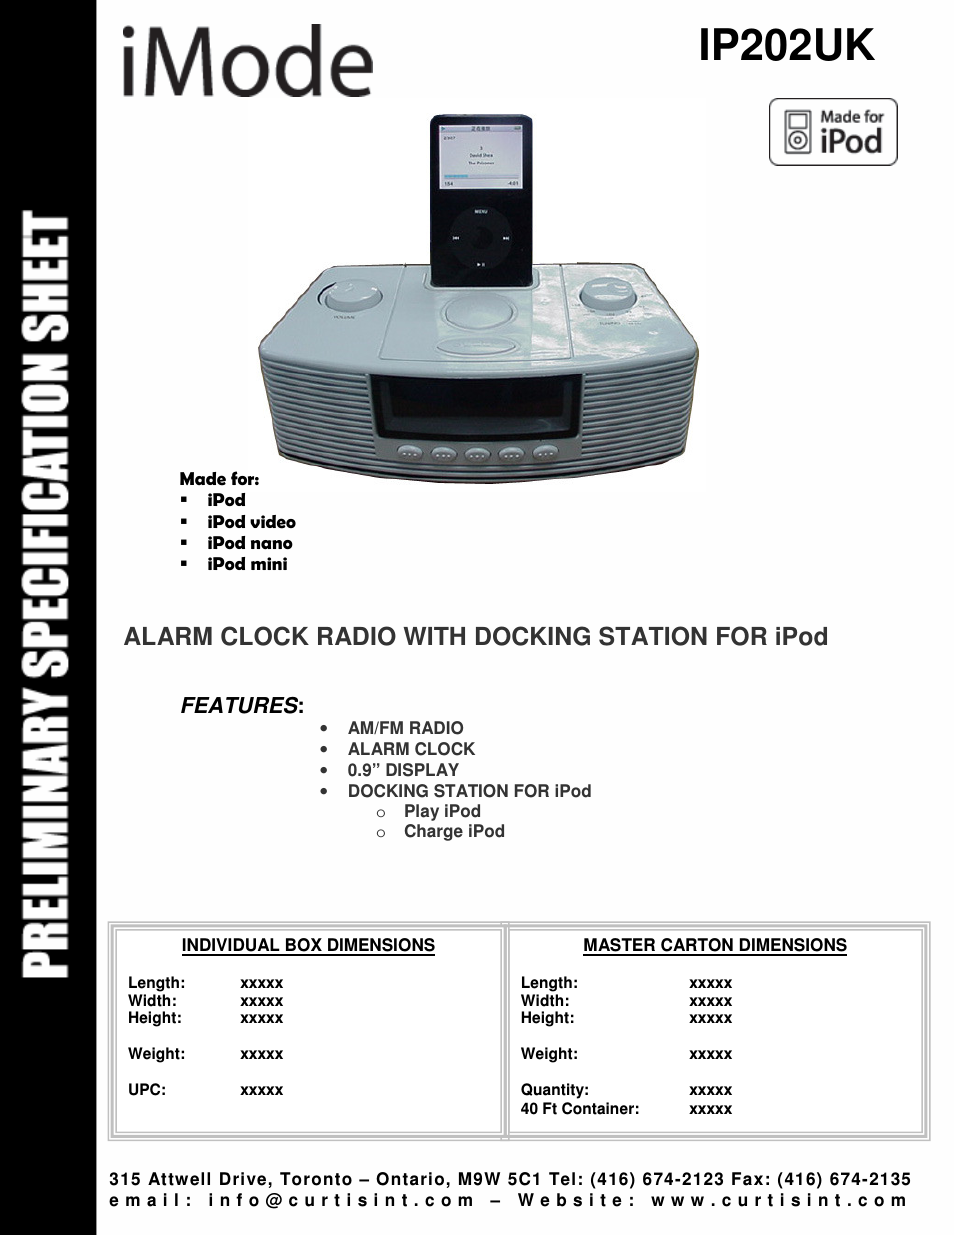 Alarm Clock Radio with Docking Station for Ipod IP202UK